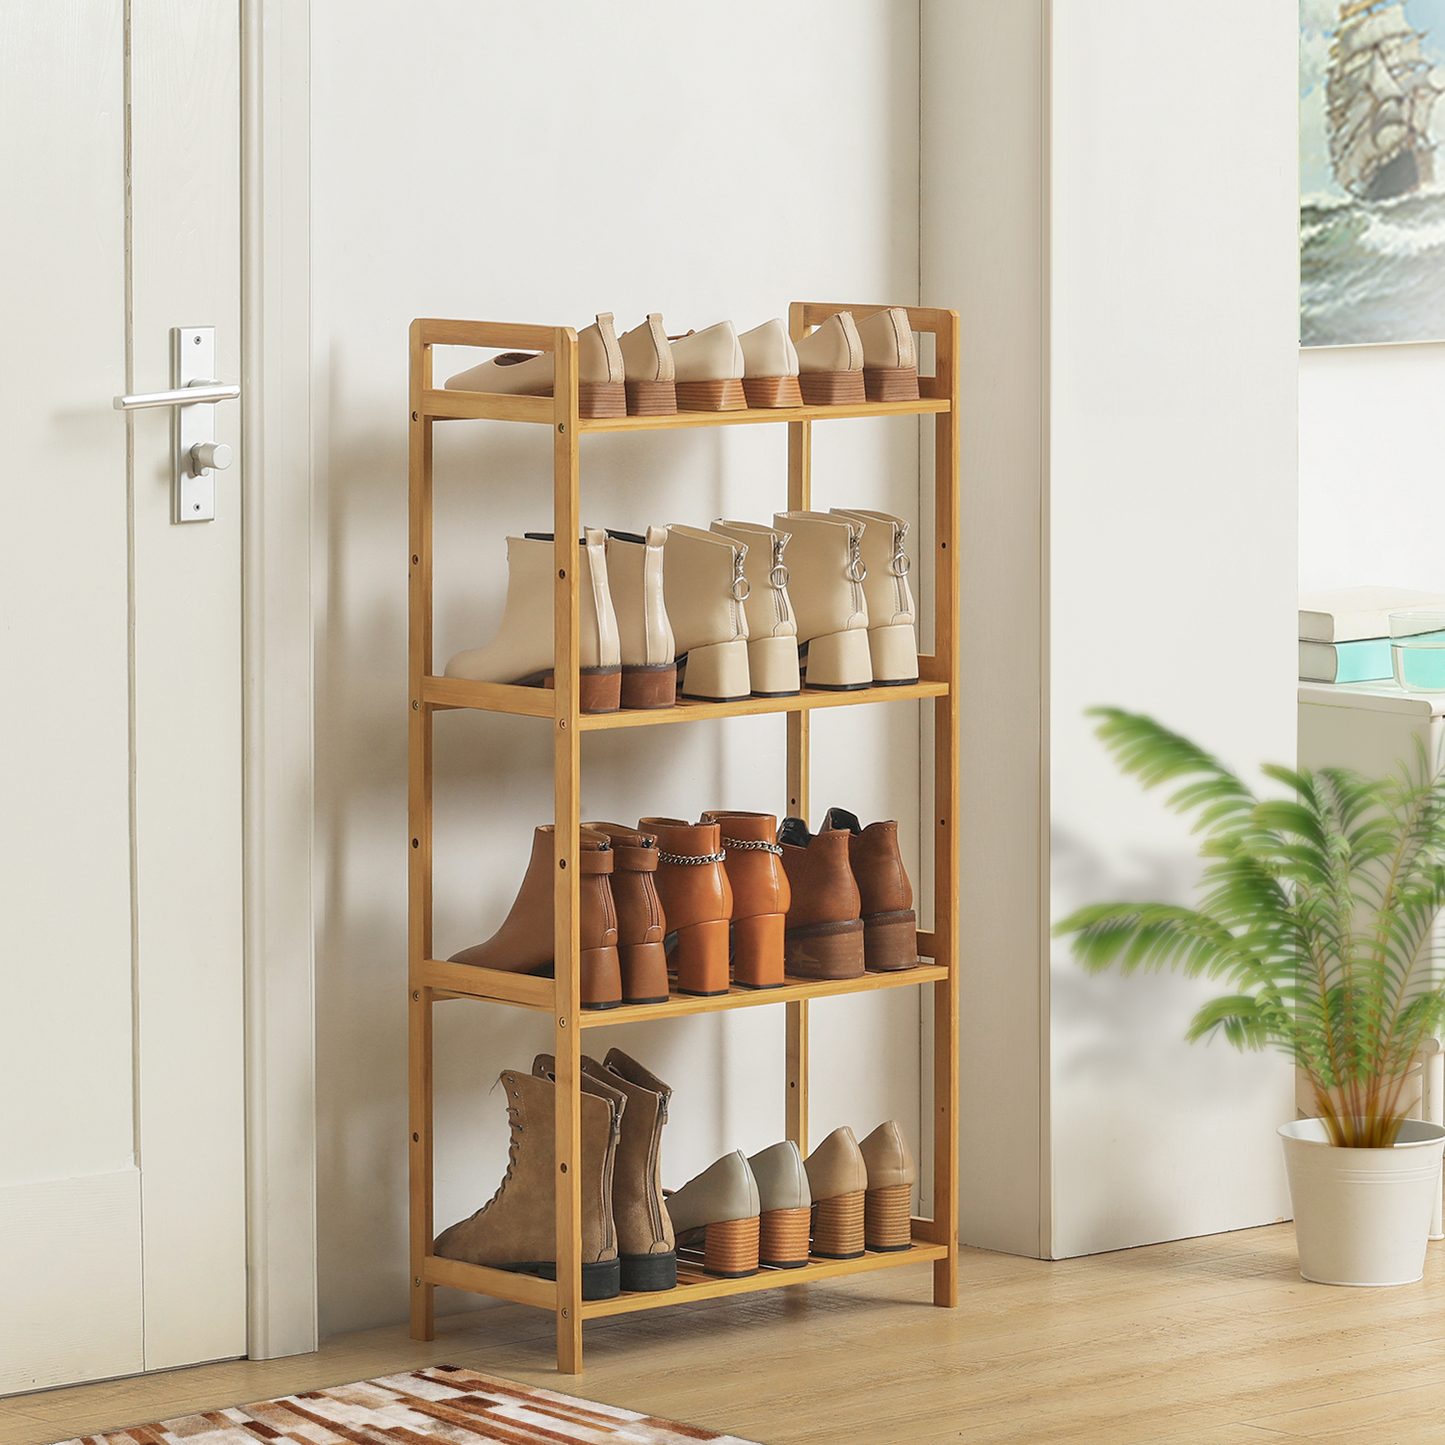 Adjustable Shoe Rack Entryway Shelf Organizer - 4 Tier - Natural